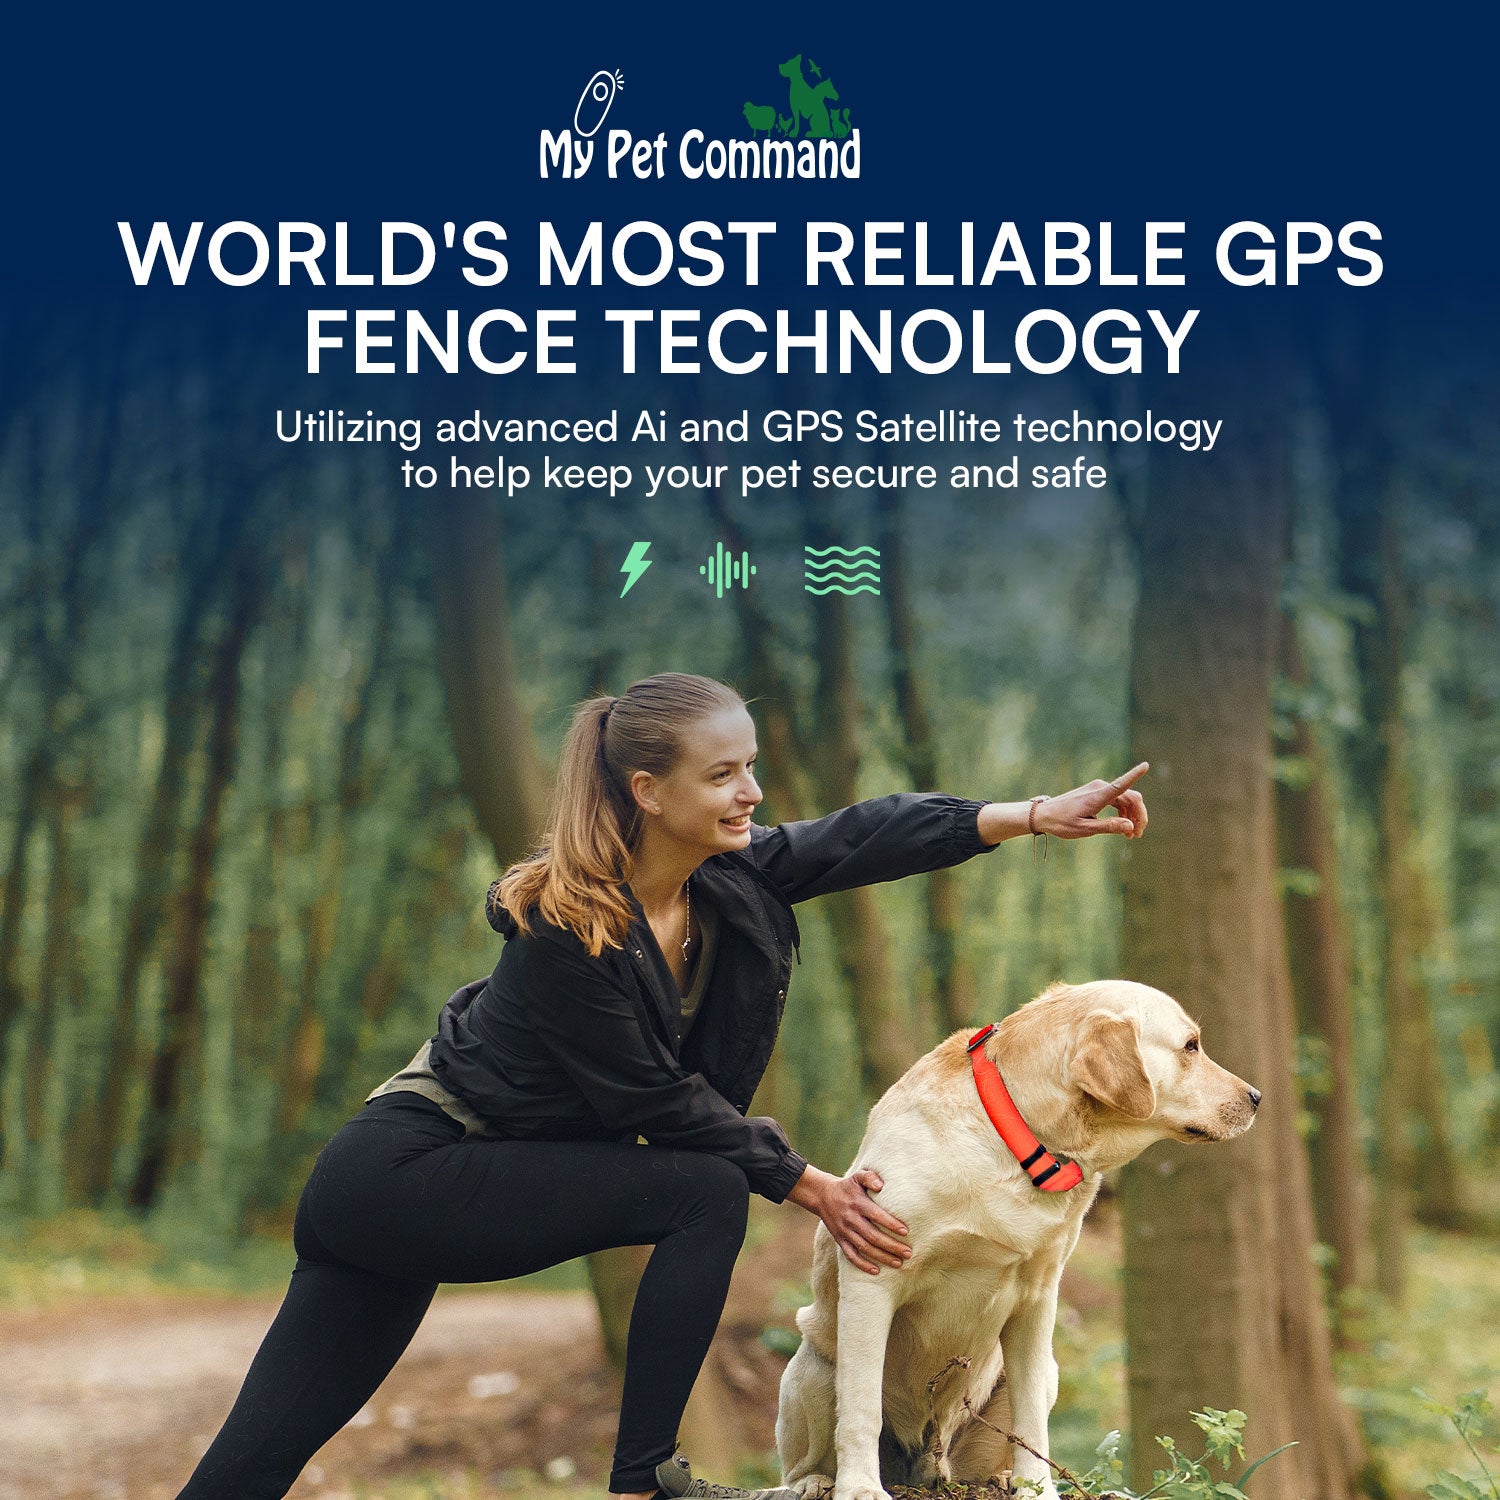 2 in 1 Wireless GPS Dog Shock Collar Fence/Training Collar